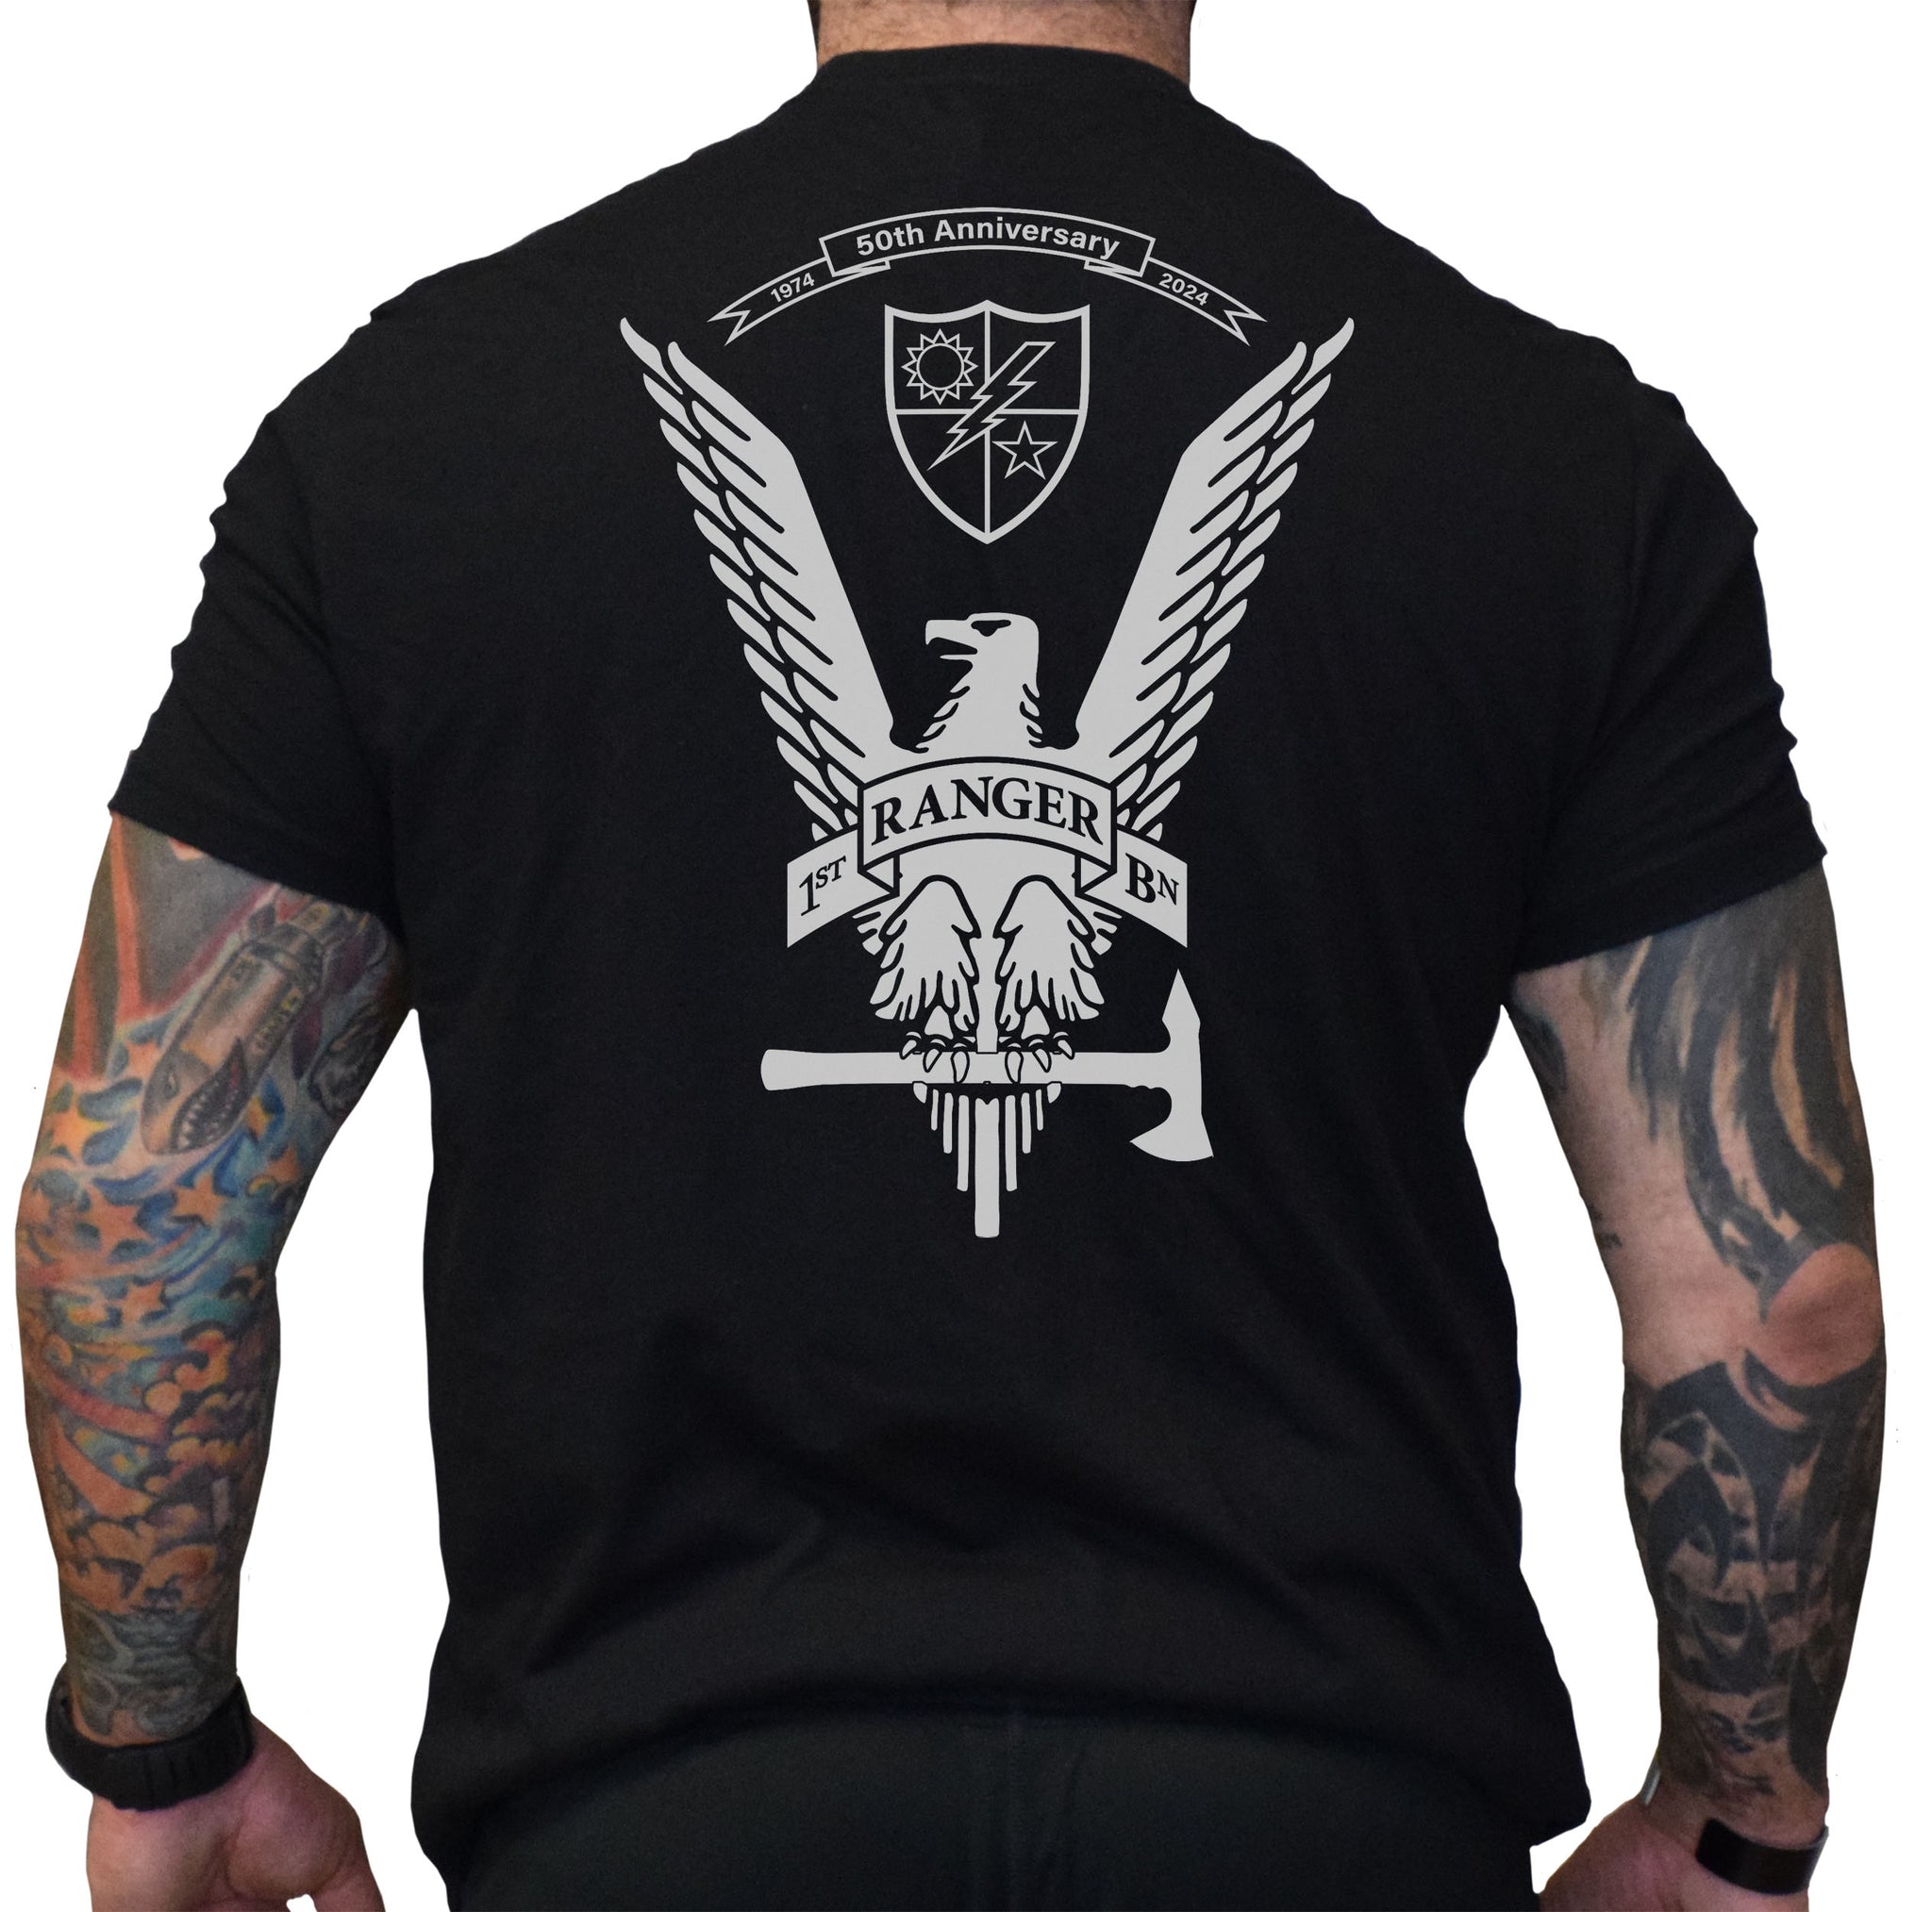 1st Batt 50th Anniversary Tomahawk Eagle Shirt